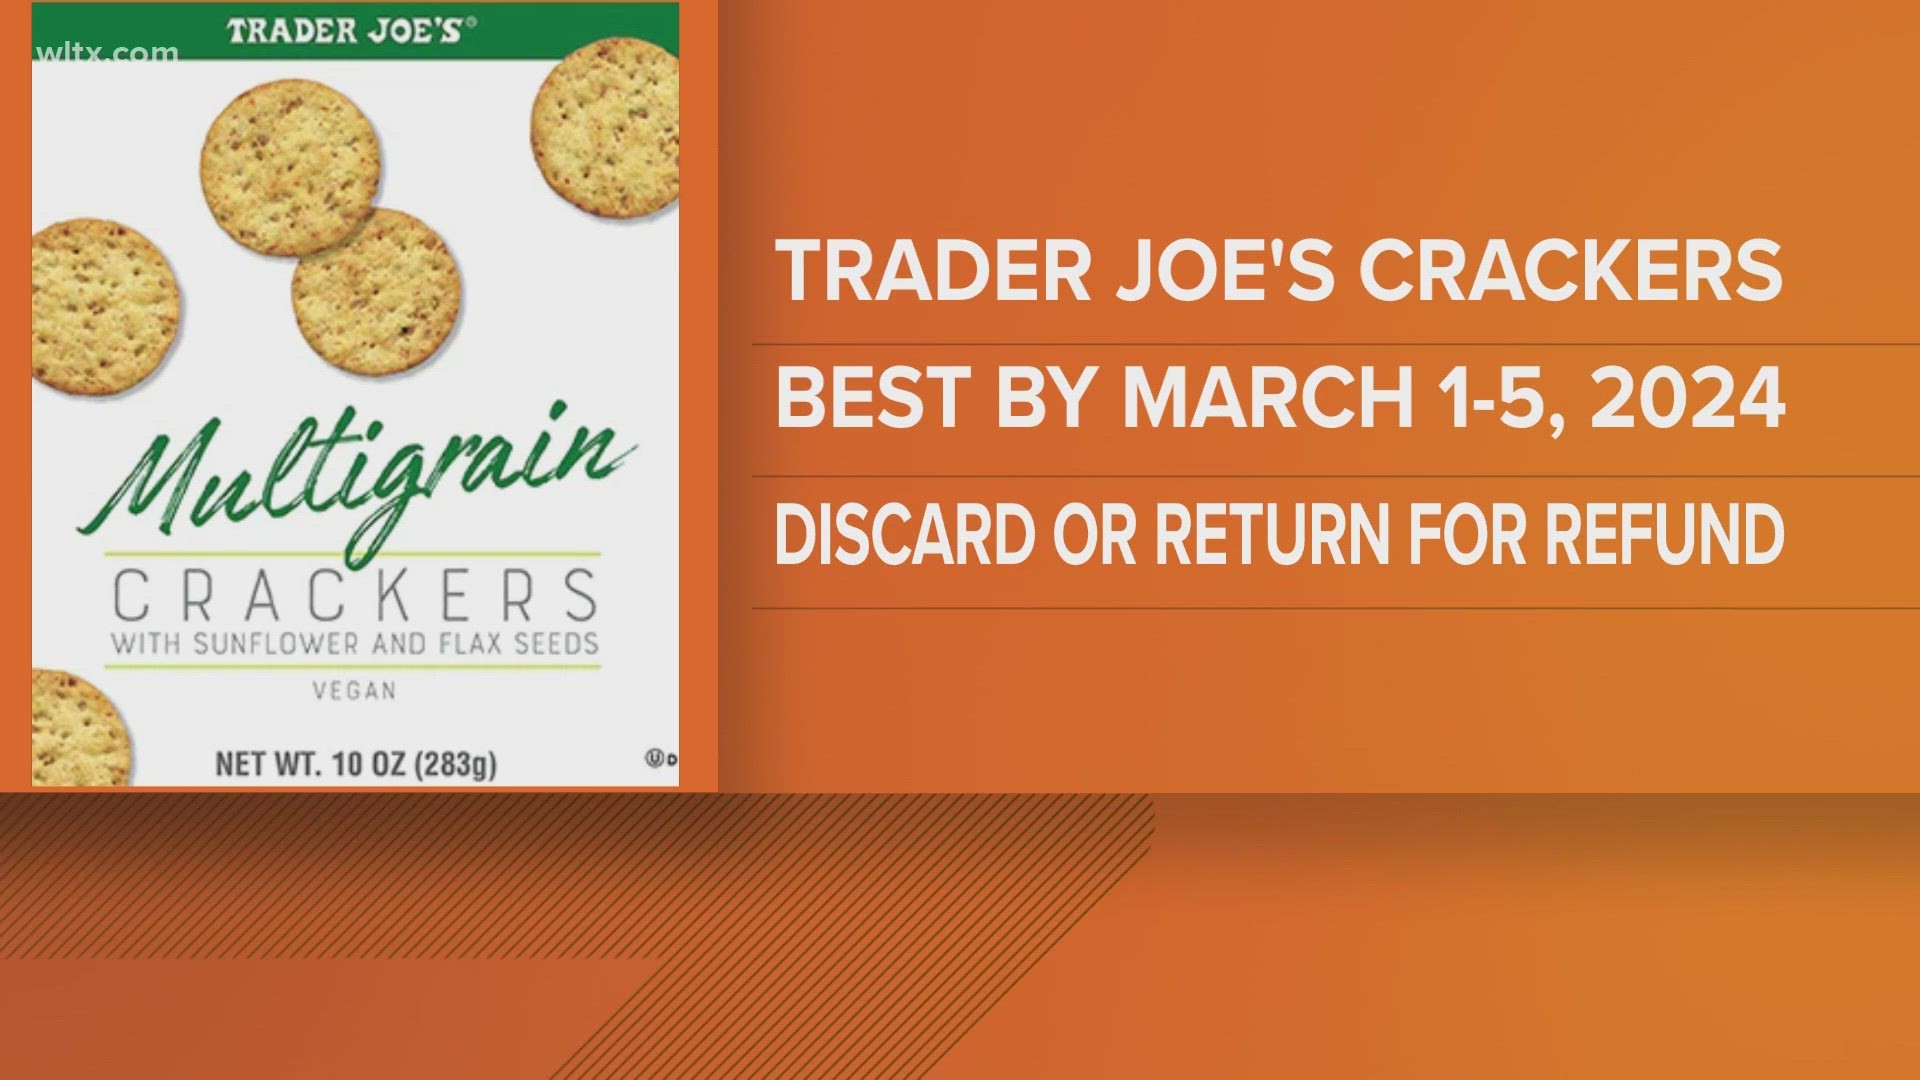 Trader Joe's recalls crackers because they may contain metal